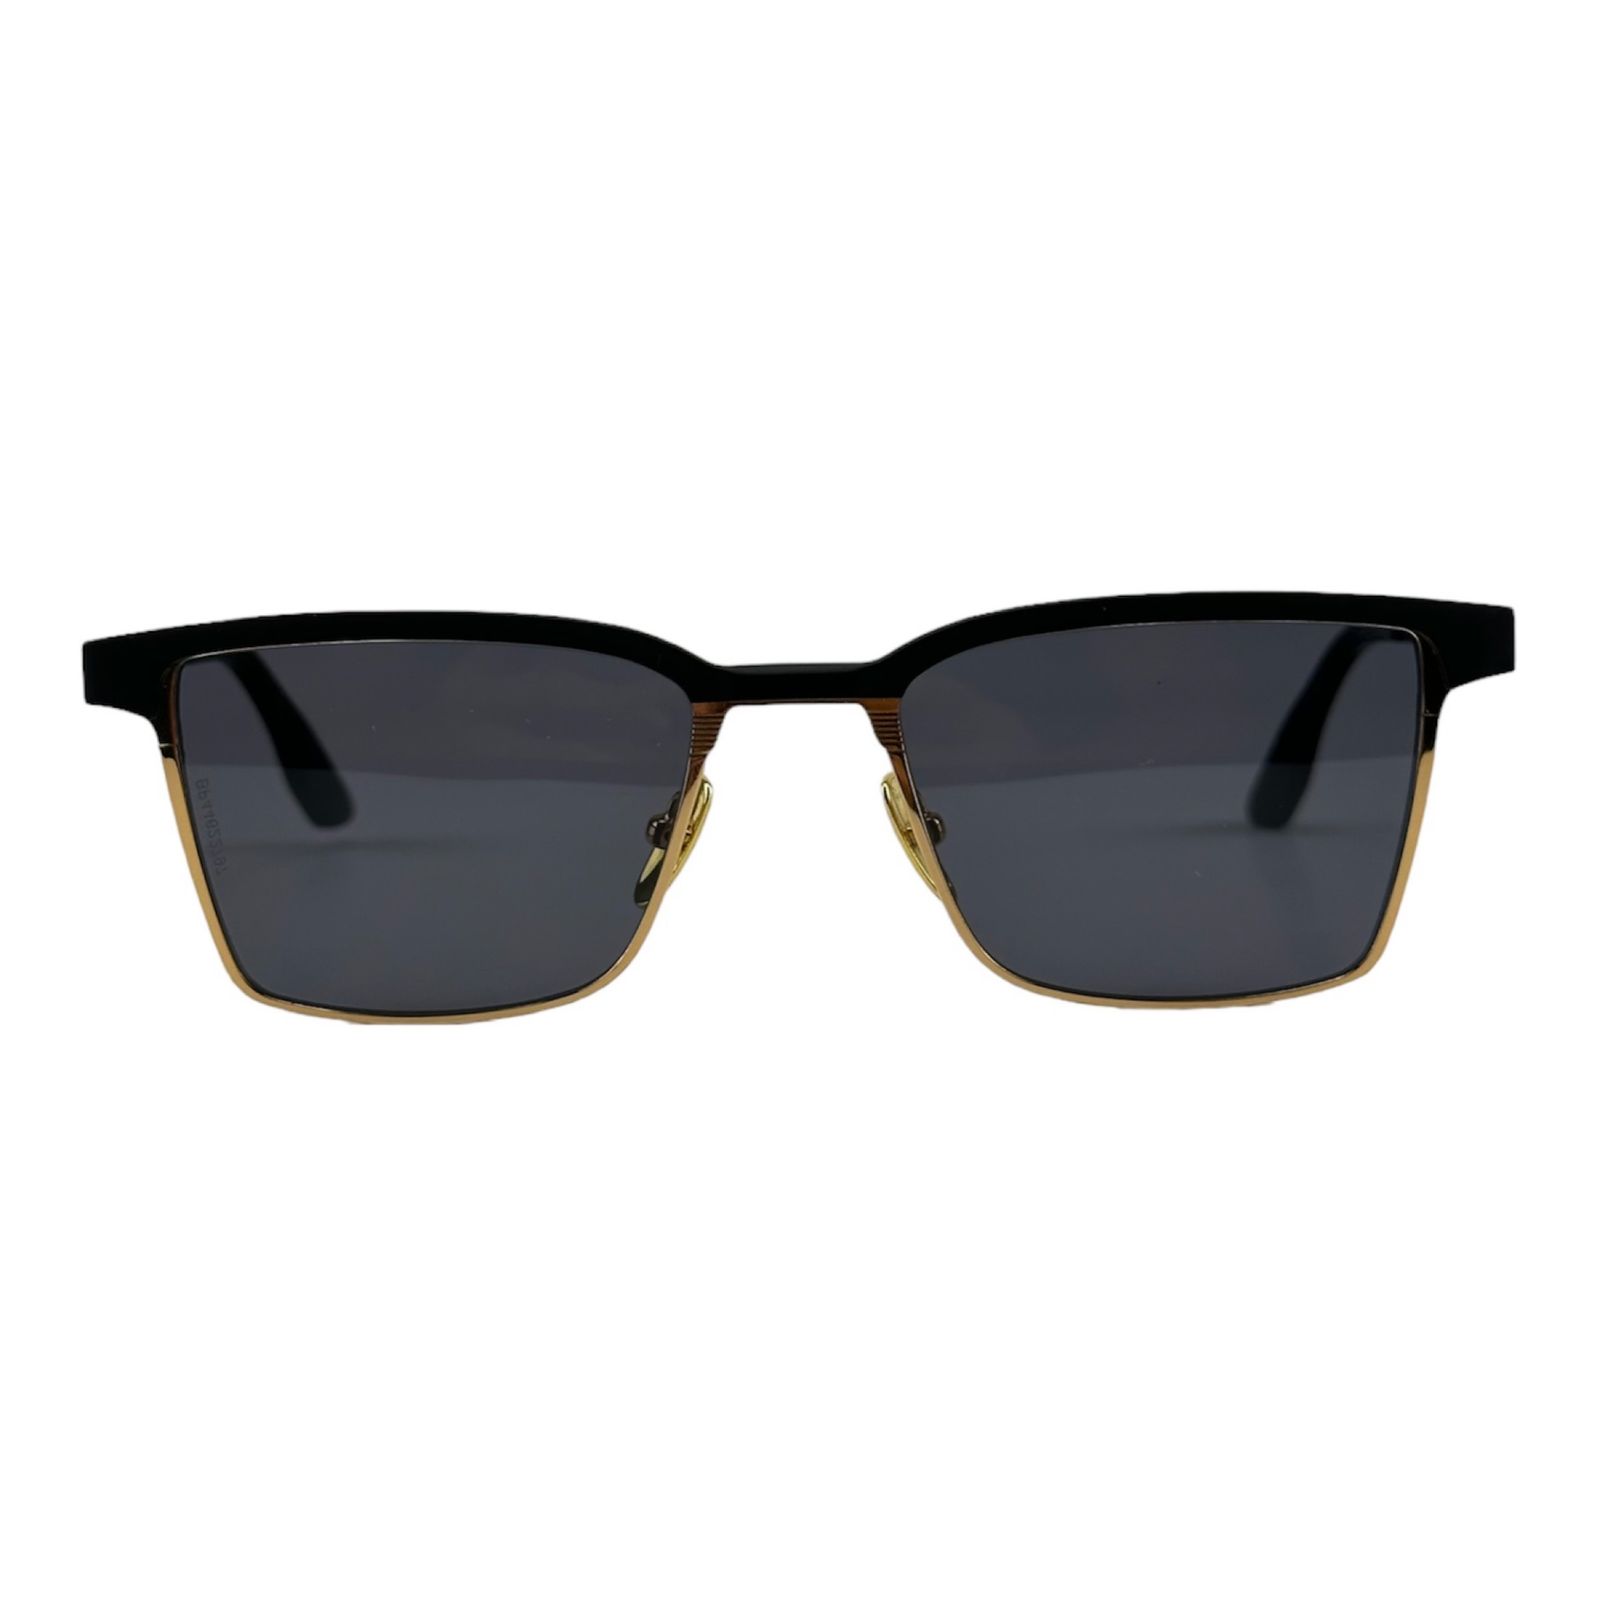 عینک آفتابی دیتا مدل DTX-137 01 SLV-GLD -  - 1